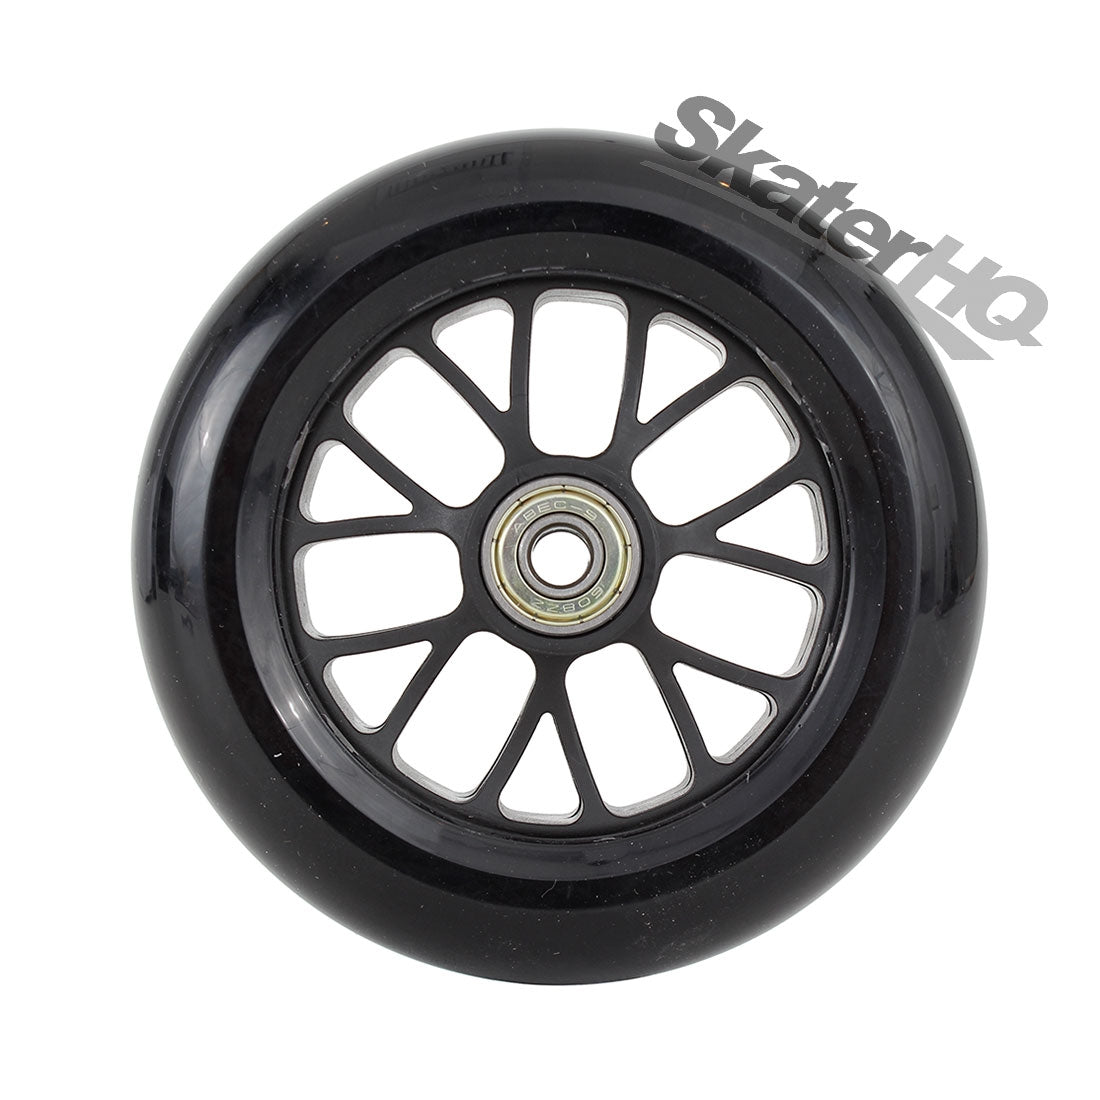 Micro 120mm Wheel - Black Scooter Wheels